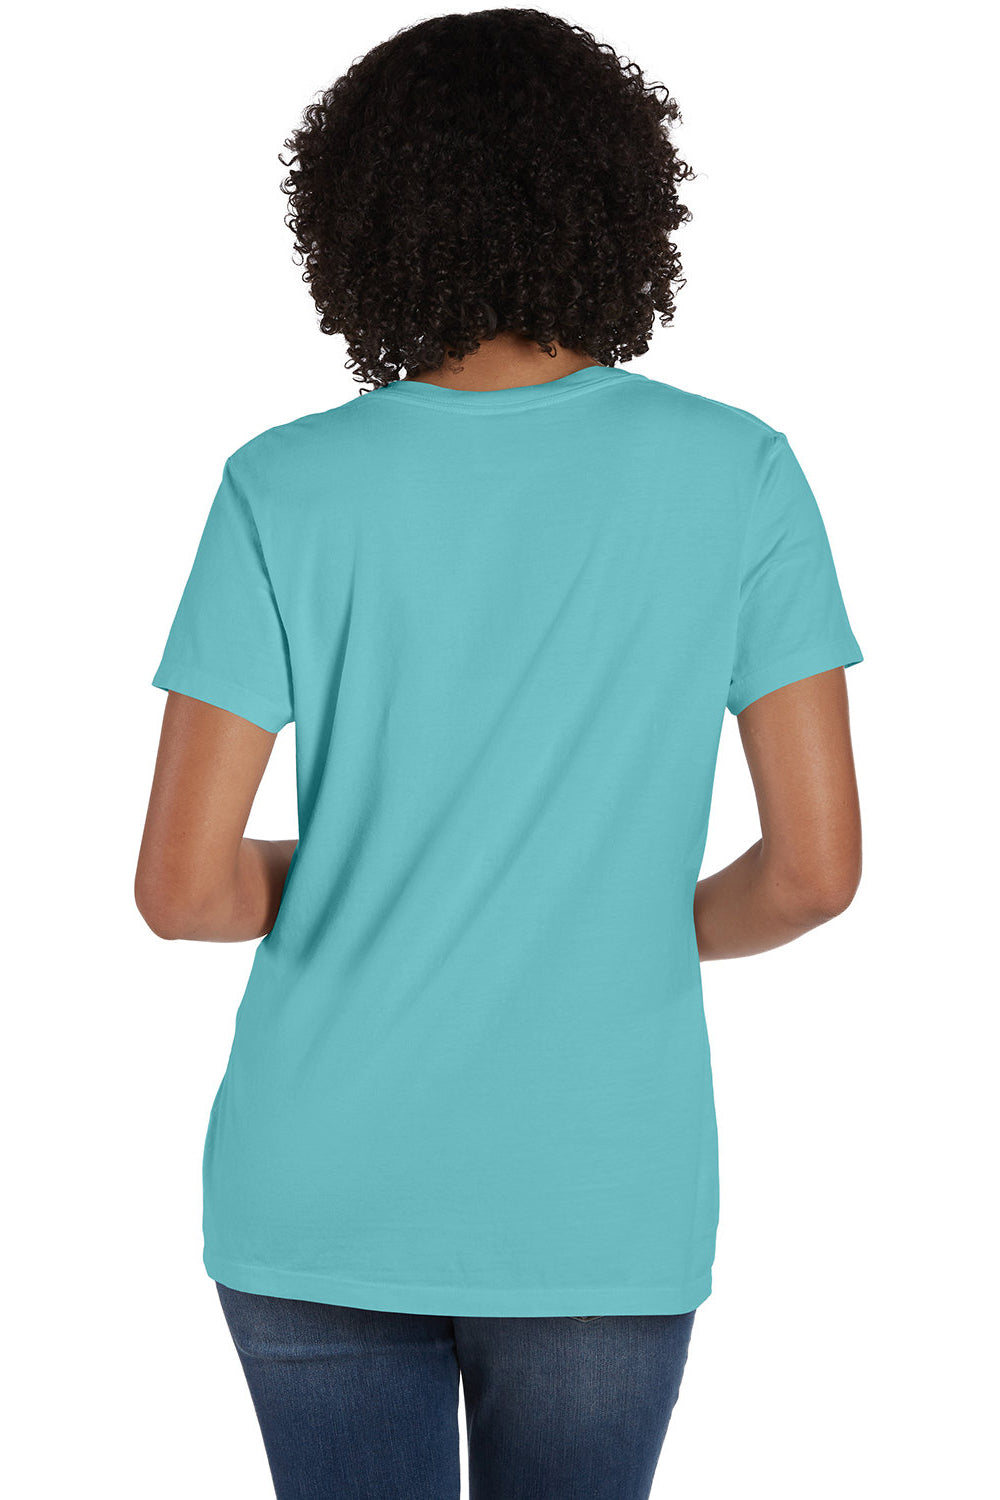 ComfortWash By Hanes GDH125 Mens Garment Dyed Short Sleeve V-Neck T-Shirt Mint Green Model Back